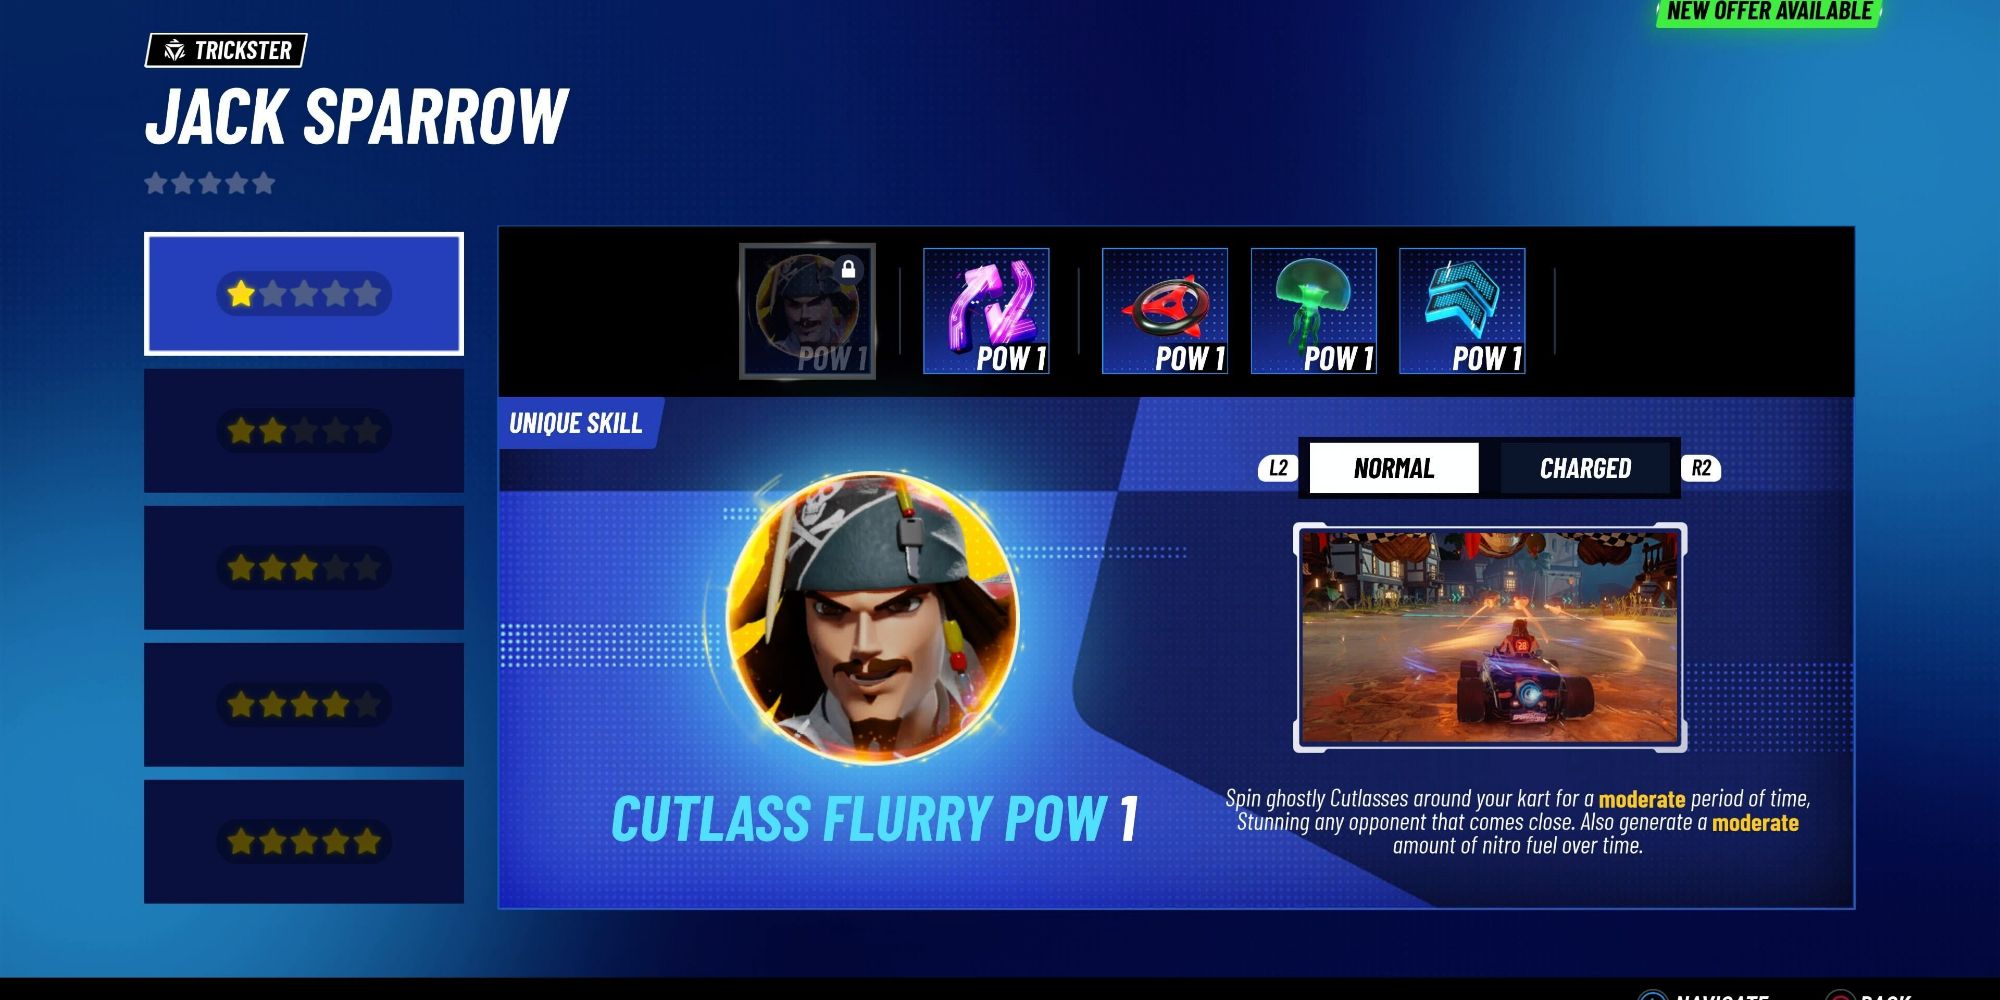 Jack Sparrow's unique skill in Disney Speedstorm, known as Cutlass Flurry